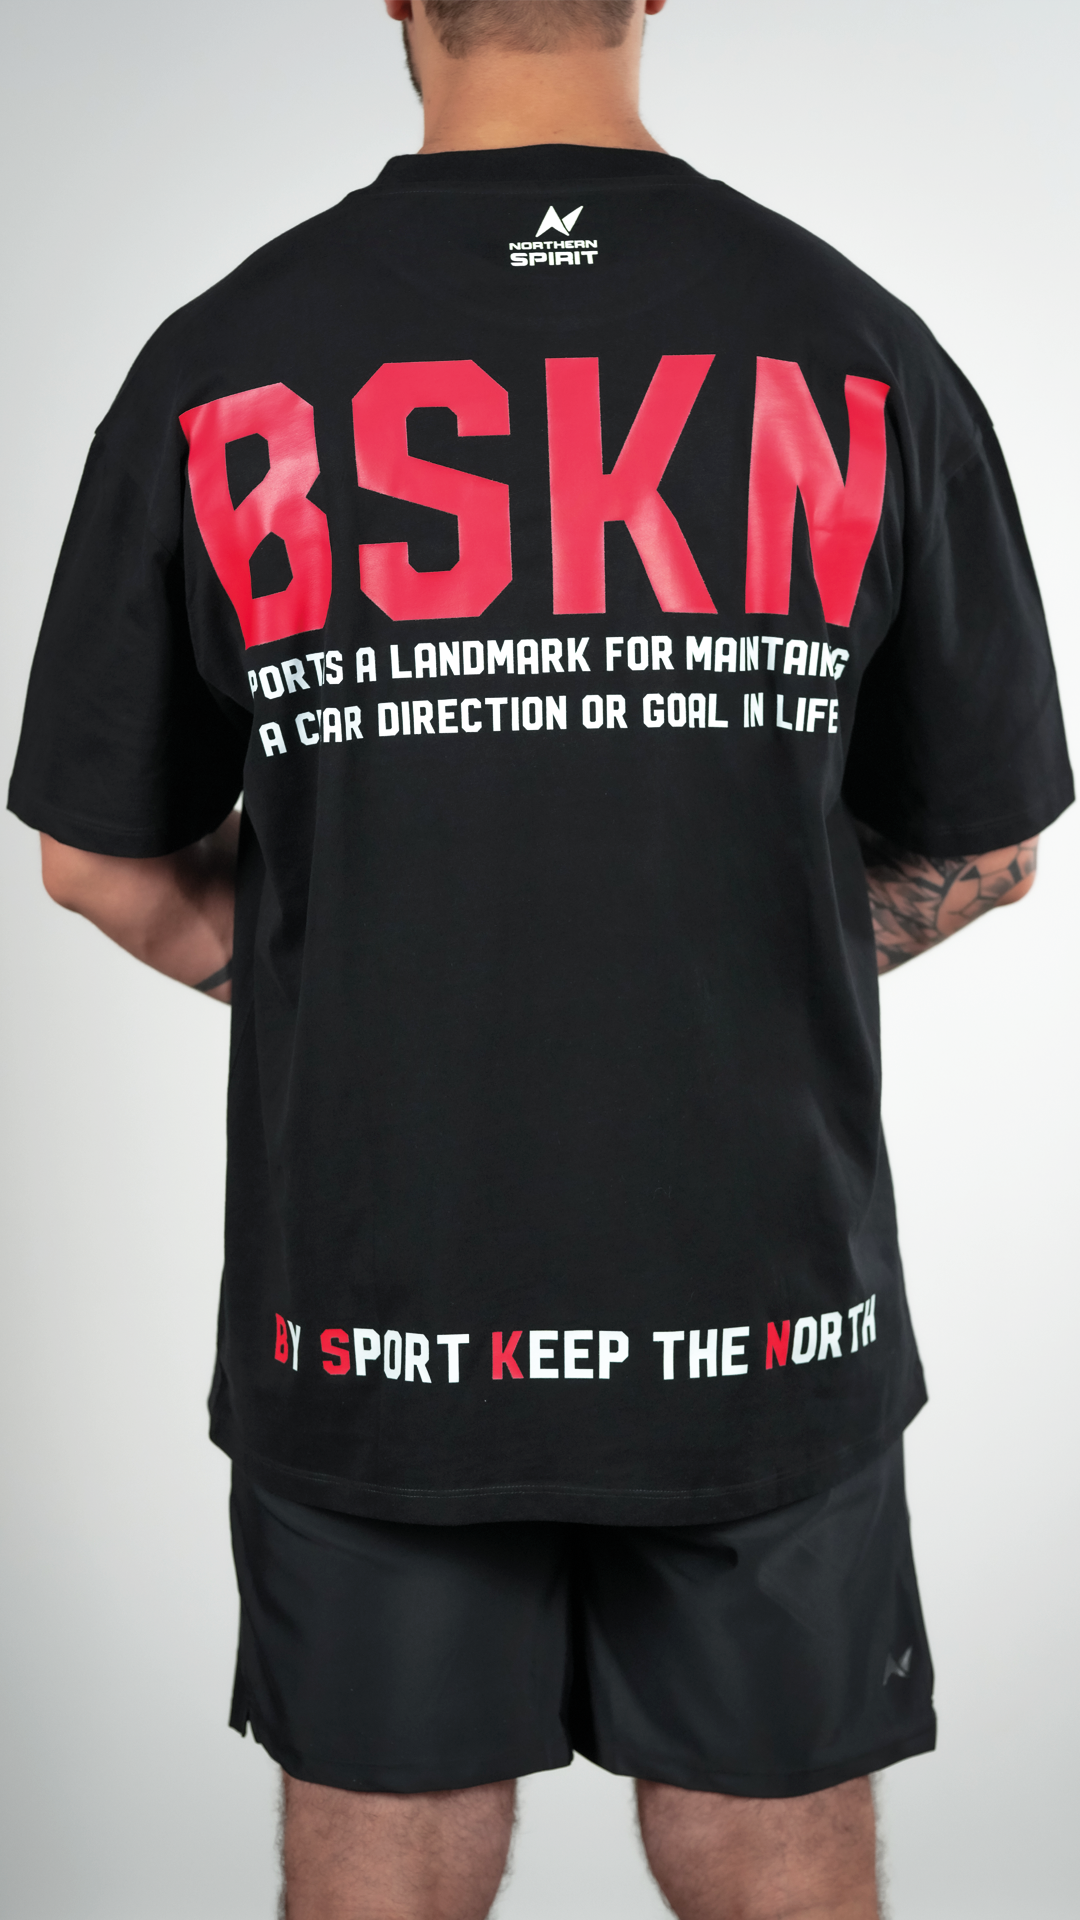 T-shirt - NS Smurf BSKN "Bold Red"